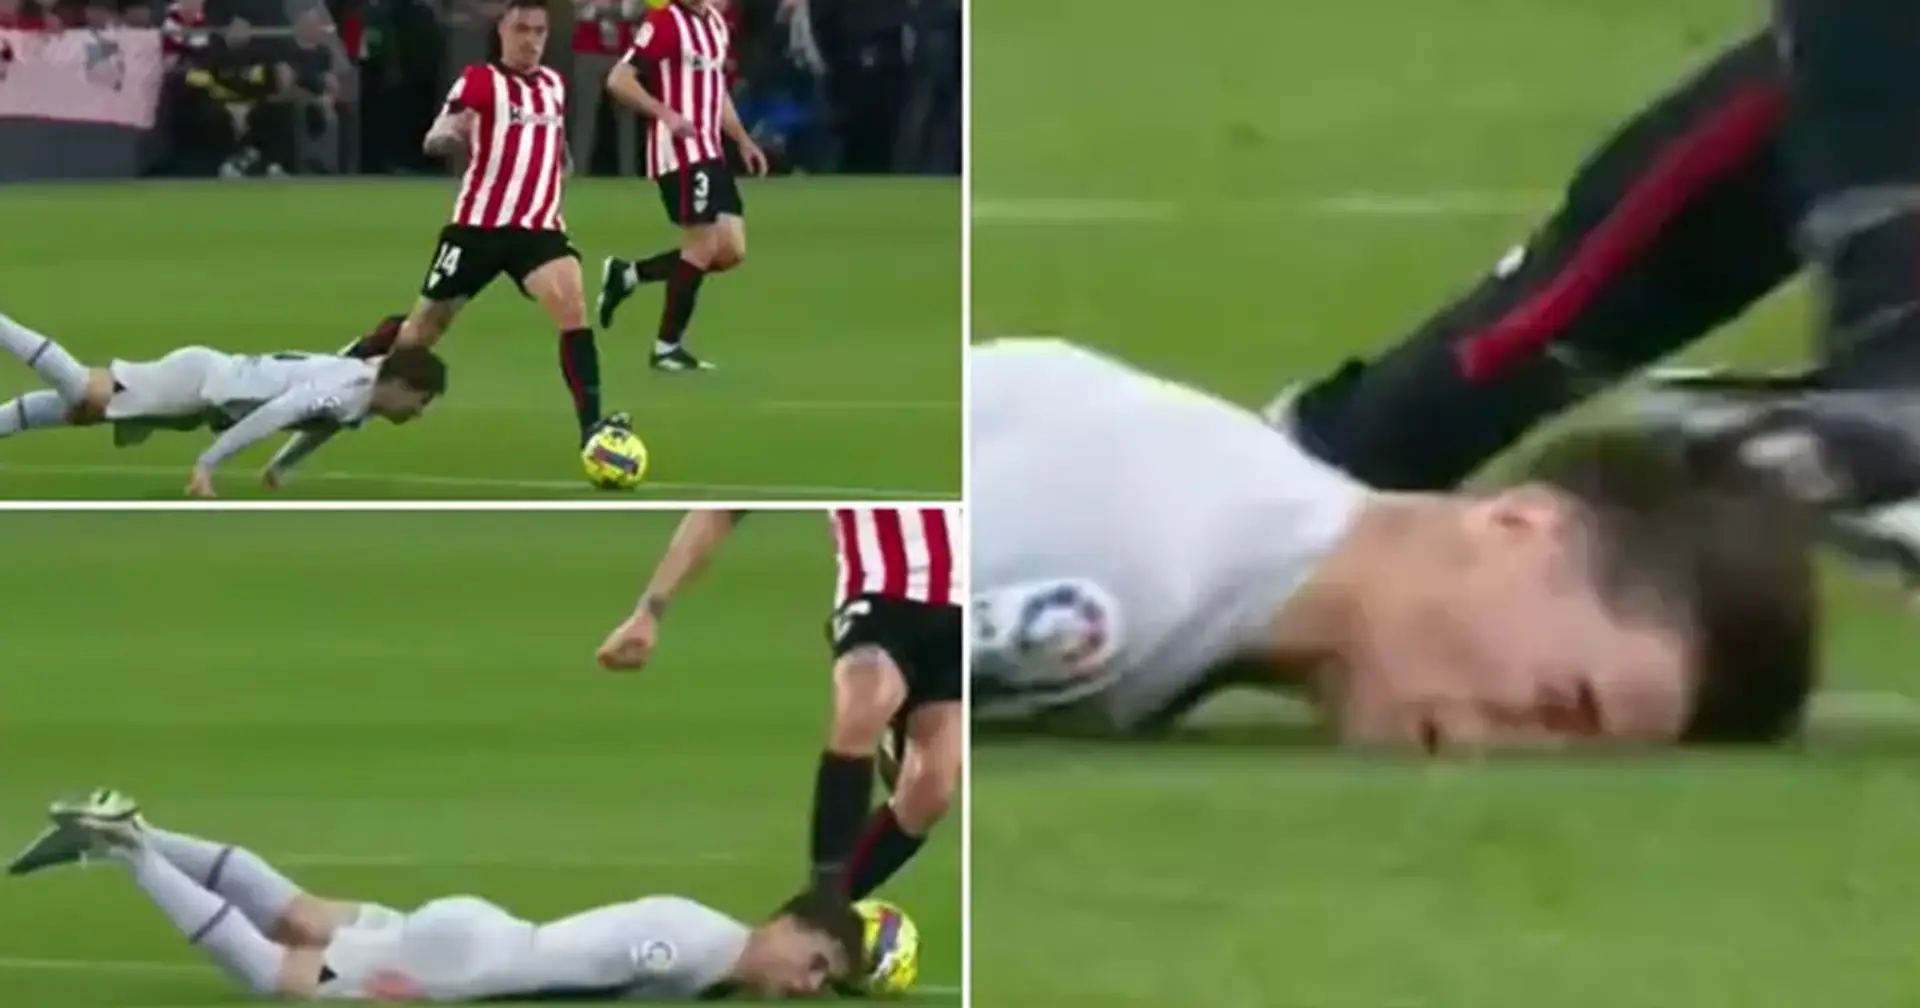 Gavi riskiert schwere Verletzungen mit "furchtlosem" Tackling per Kopf, Carles Puyol applaudiert ihm 